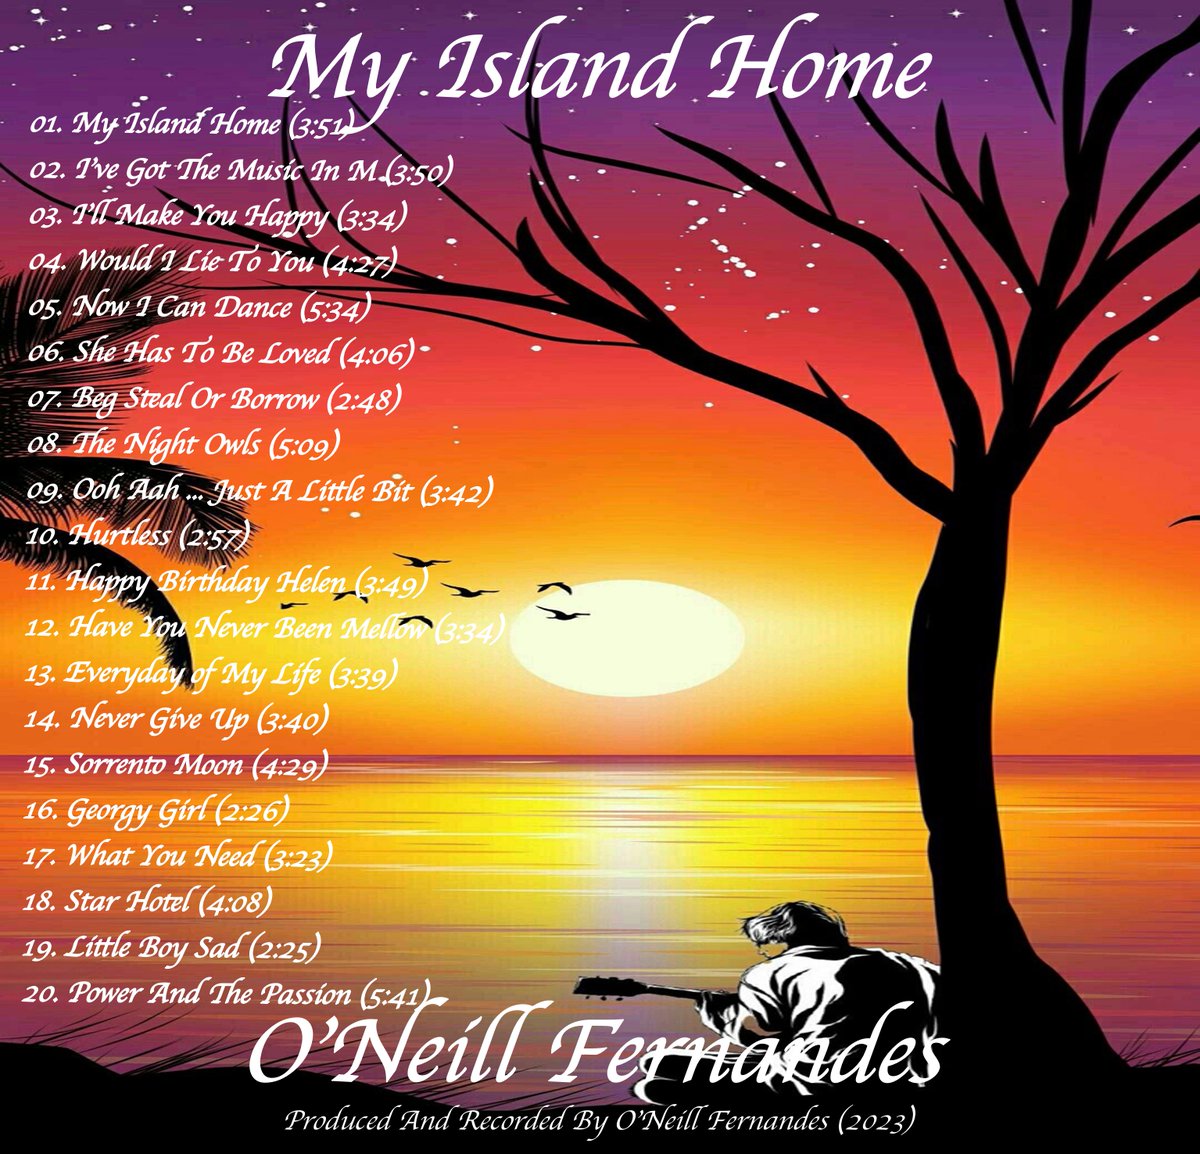 O'Neill Fernandes' shares teaser for New Album 'My Island Home'
#ONeillFernandes #popmusic #youtubemusic #youtubeteaser #newalbum
youtu.be/JHotbLBFS18